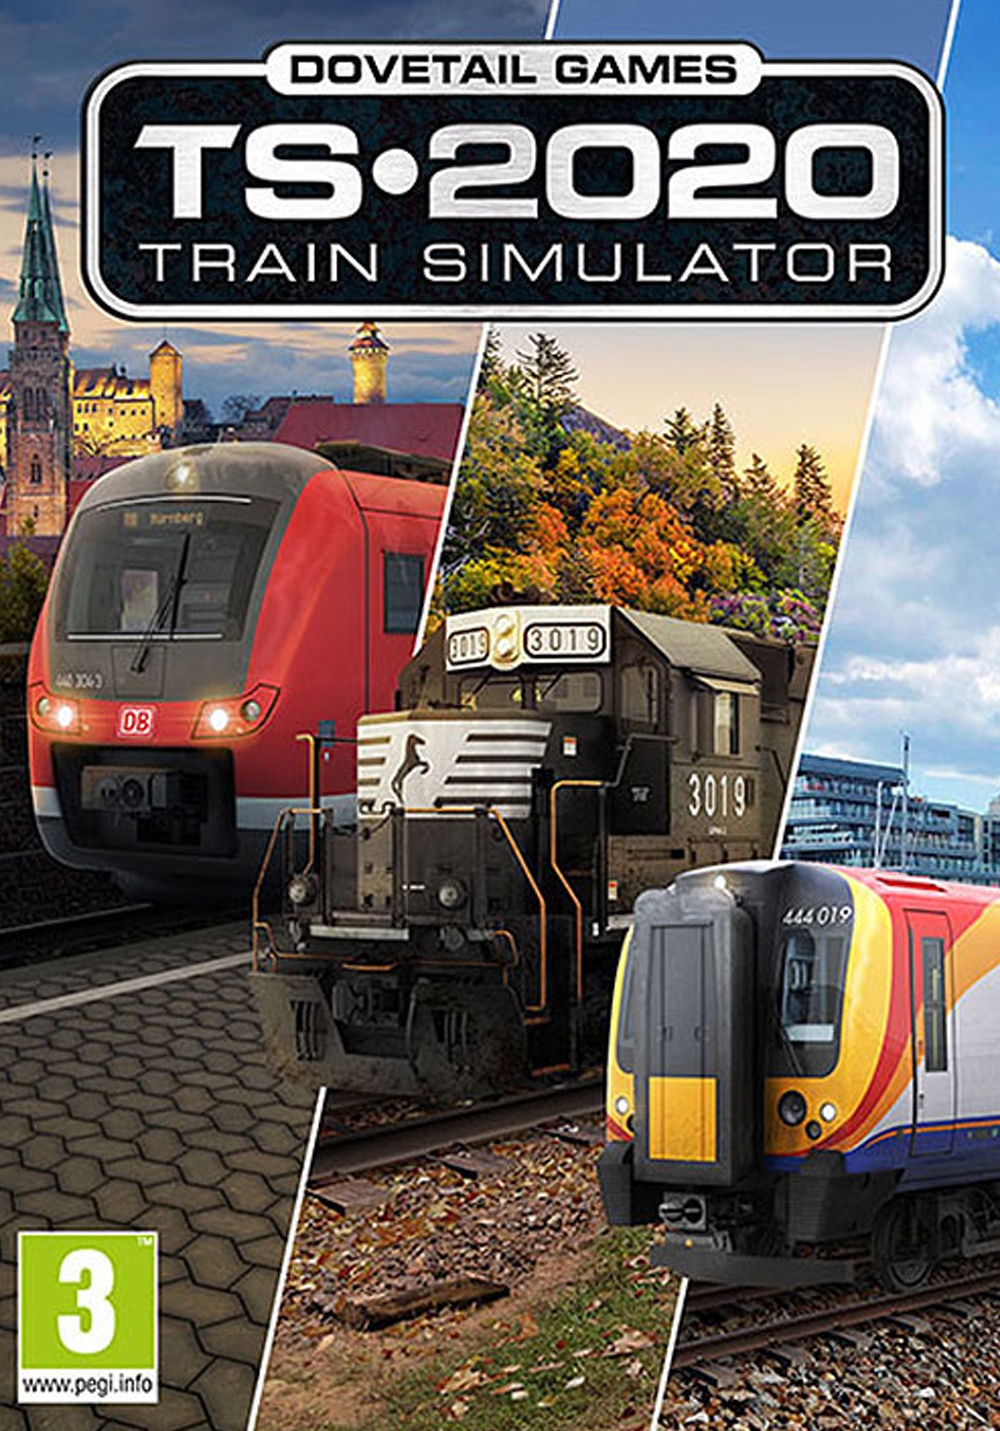 Train simulator dlc download free